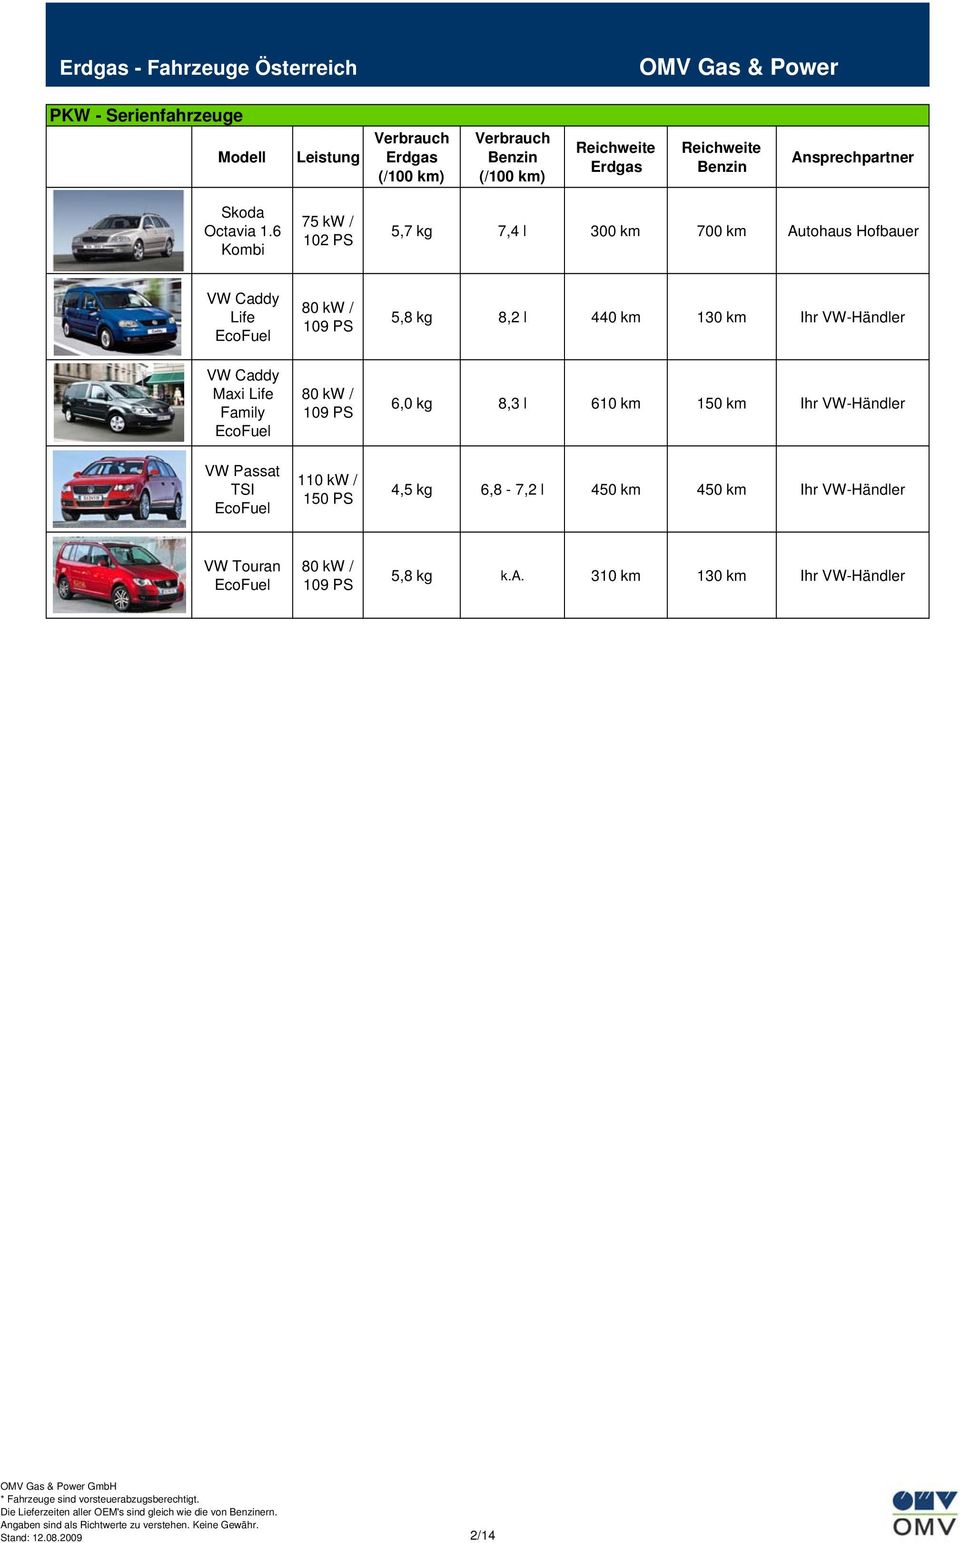 VW-Händler VW Caddy Maxi Life Family EcoFuel 80 109 6,0 kg 8,3 l 610 km 150 km Ihr VW-Händler VW Passat TSI EcoFuel 110 150